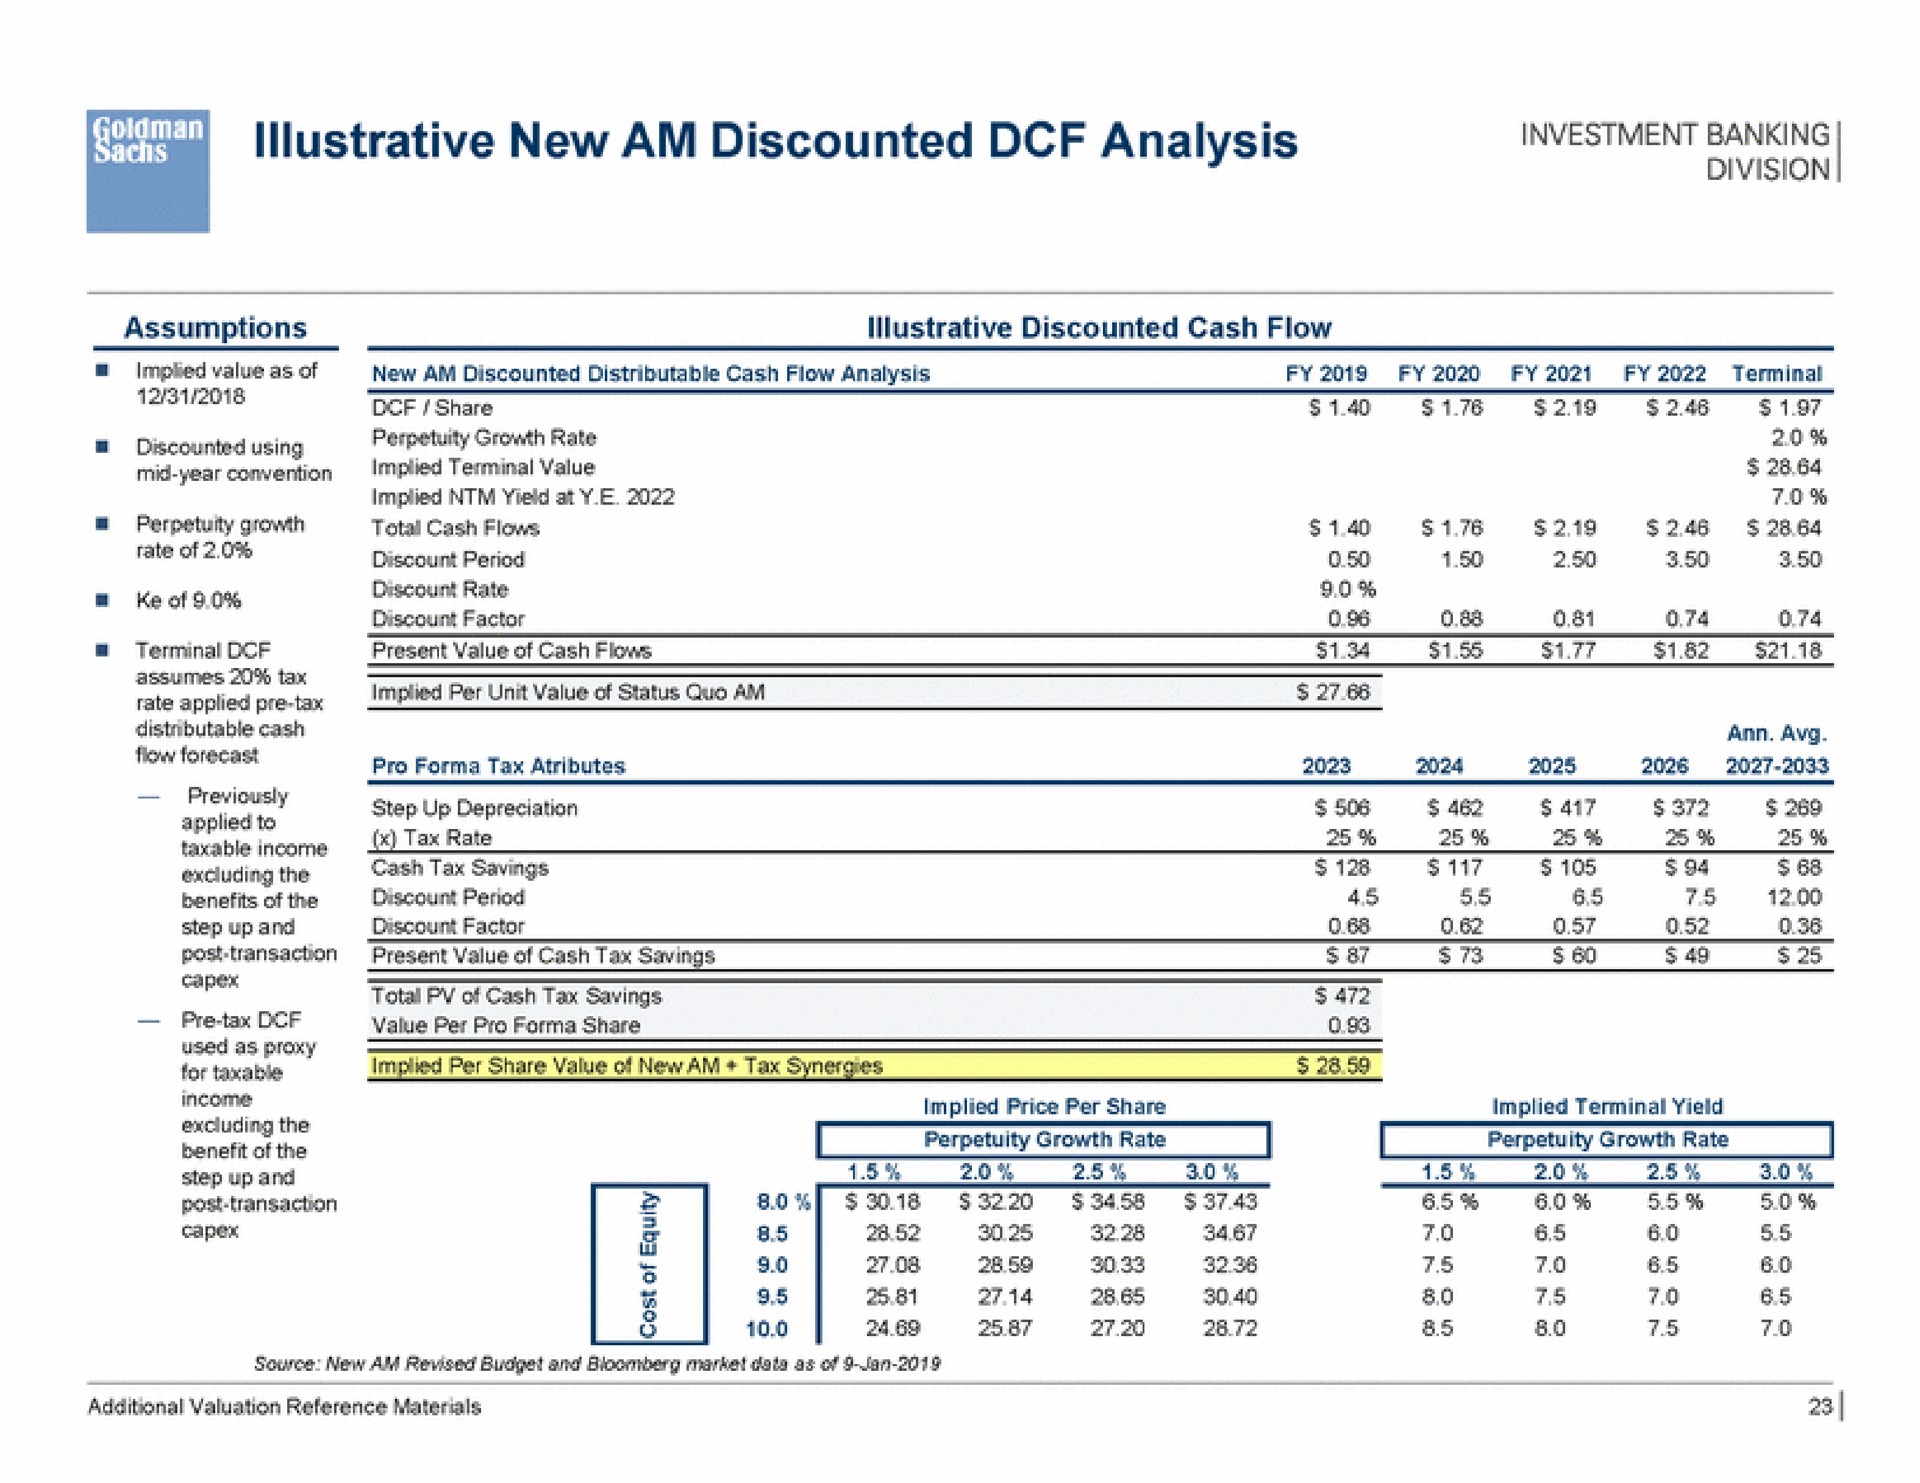 illustrative new am discounted analysis | Goldman Sachs